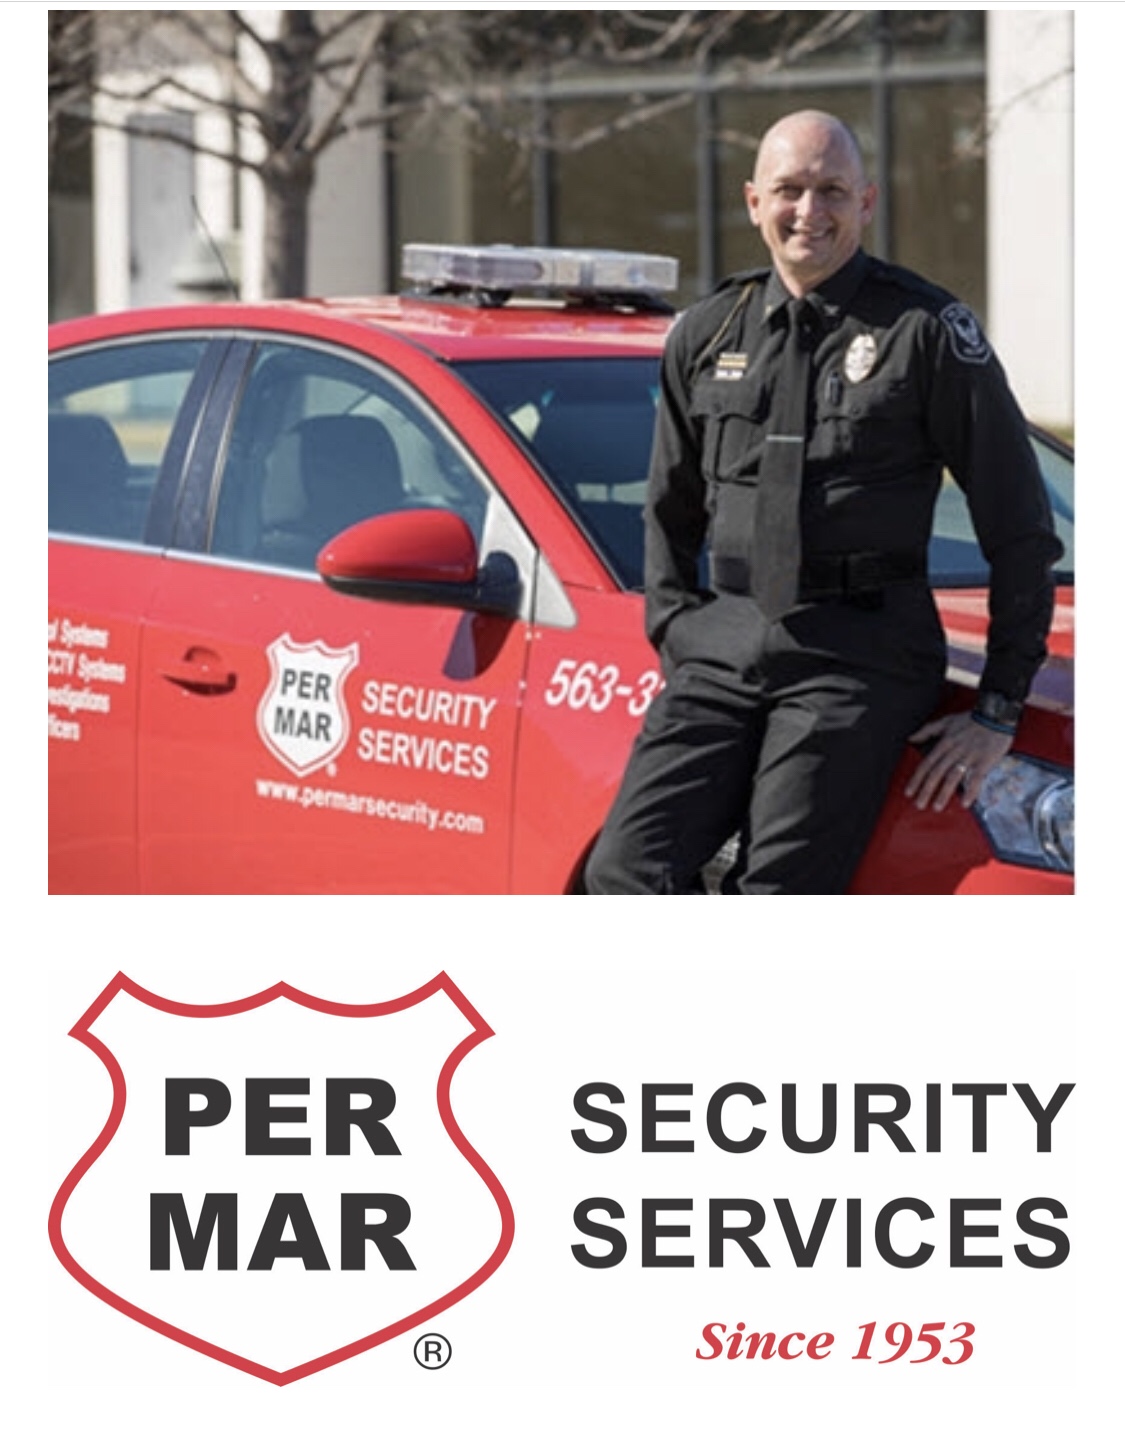 Per Mar security services